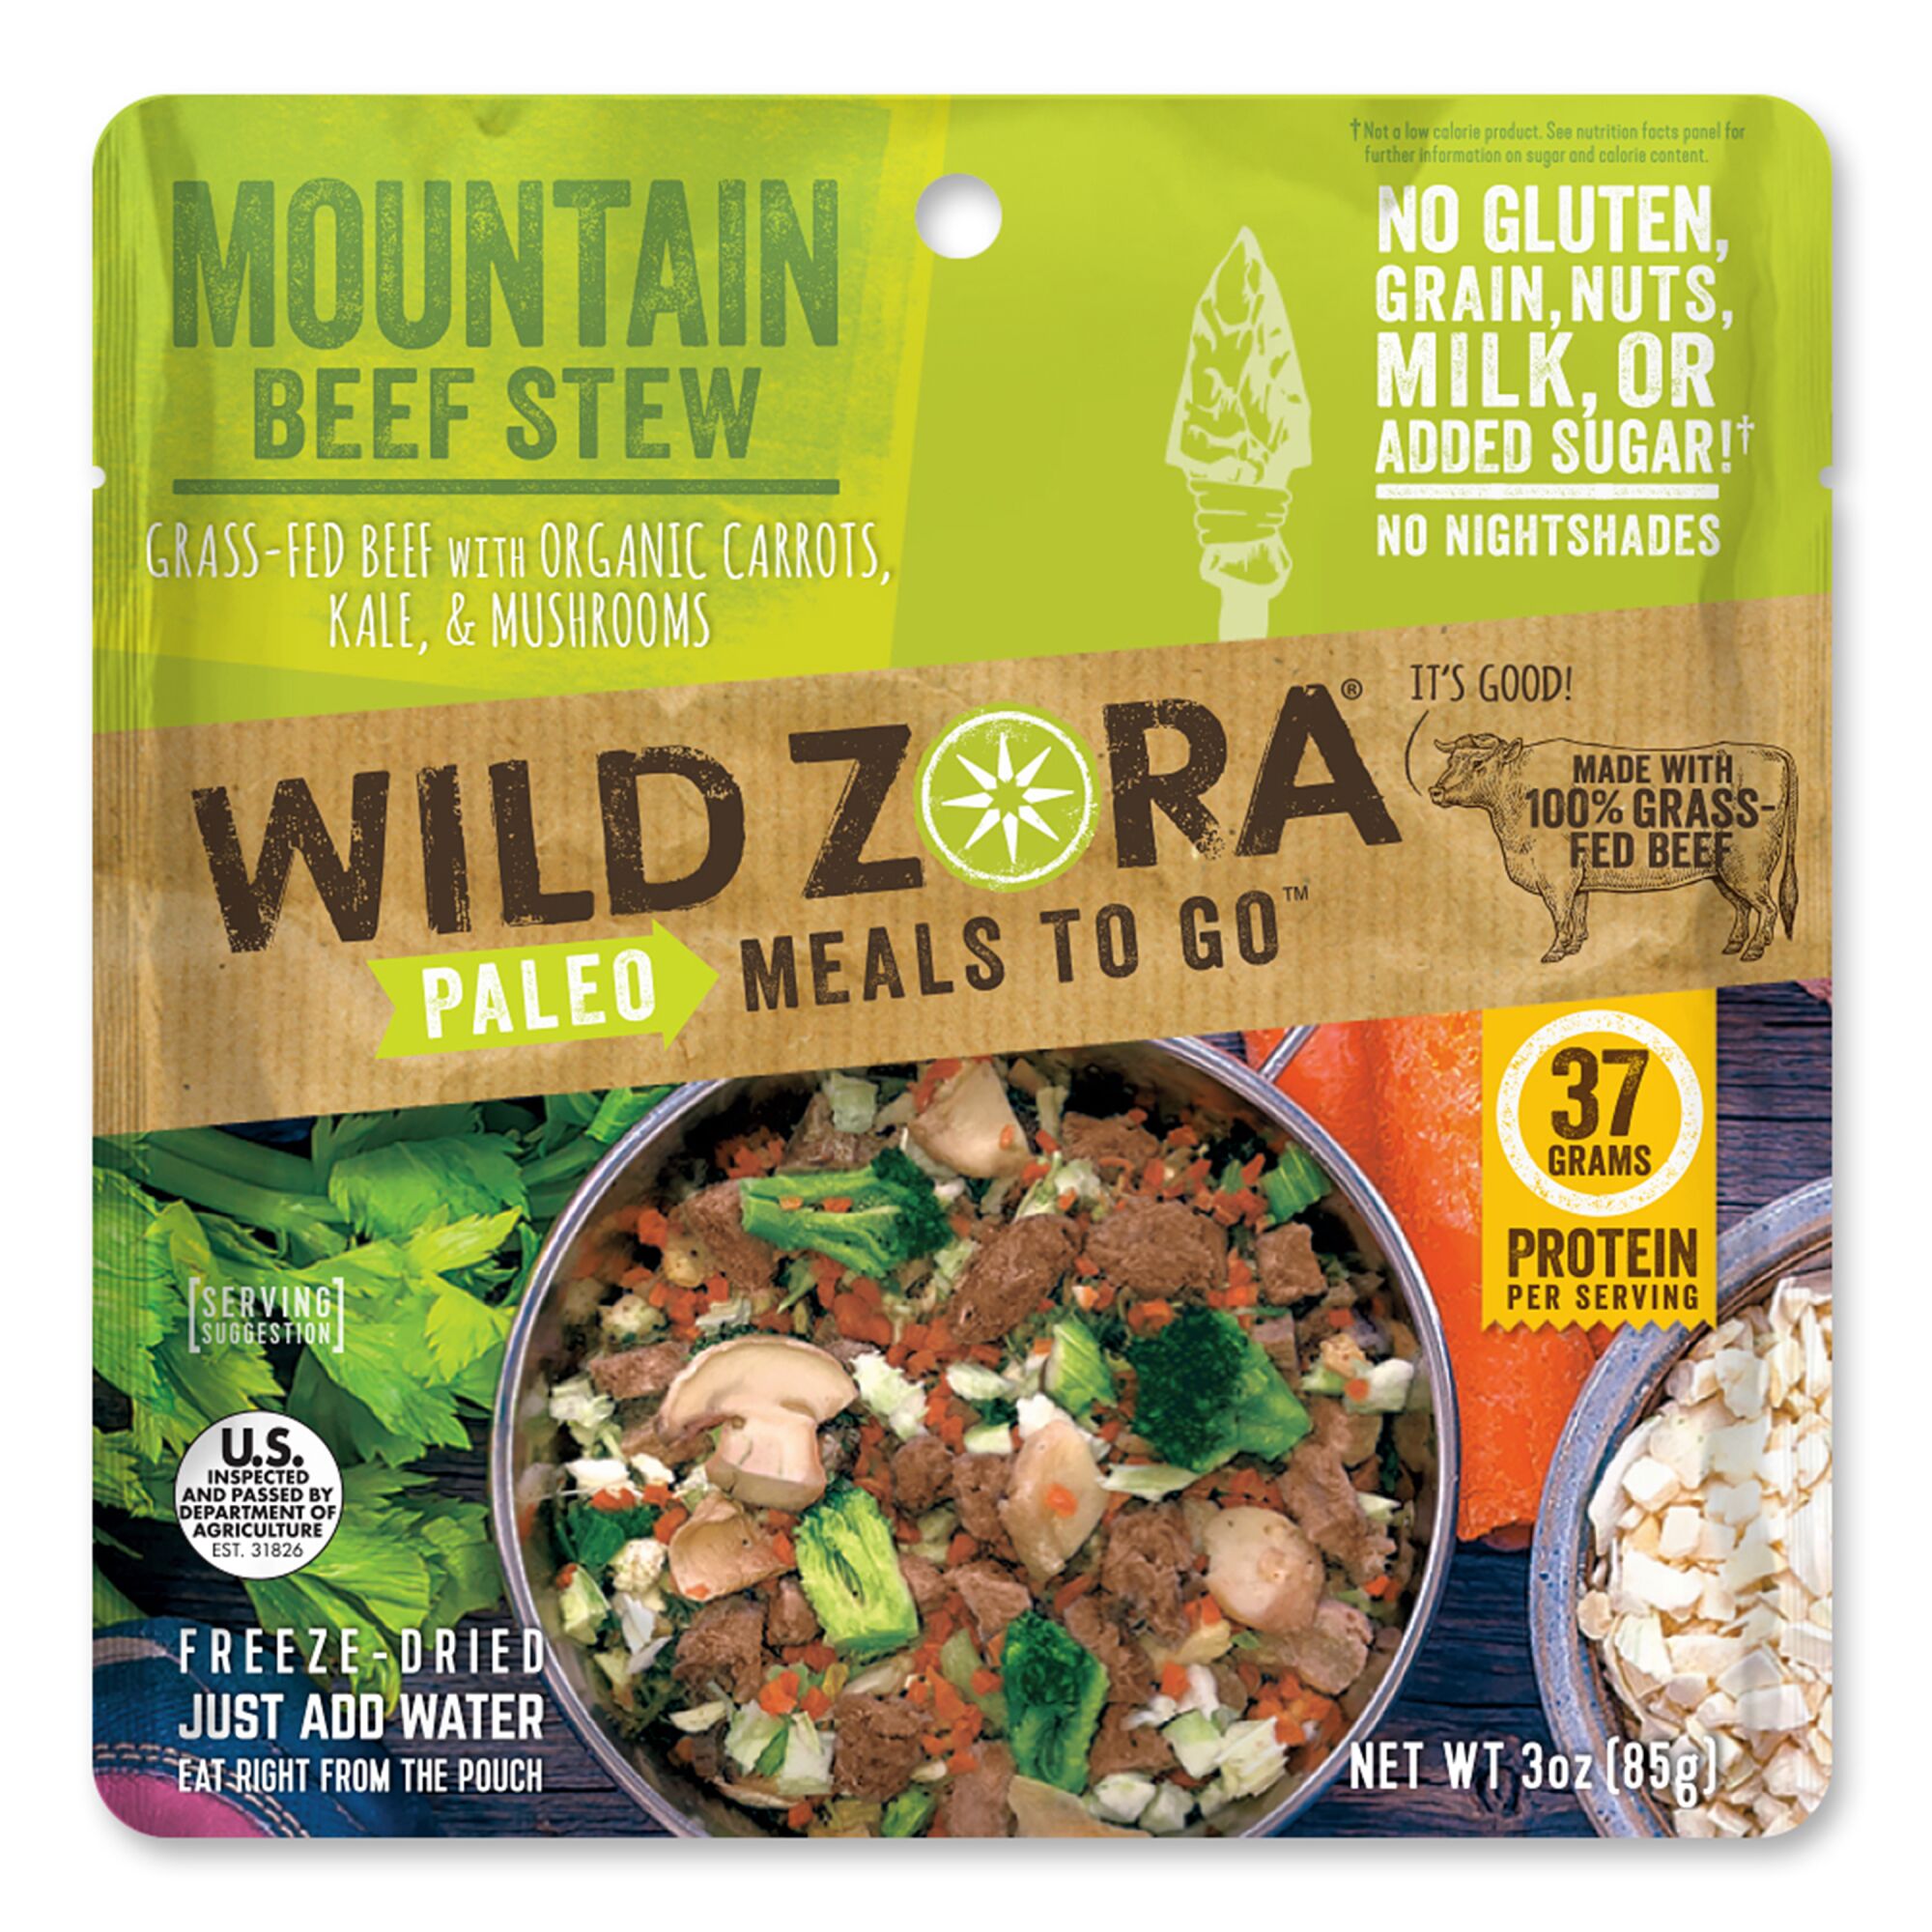 A pack of Wild Zora Mountain Beef Stew 